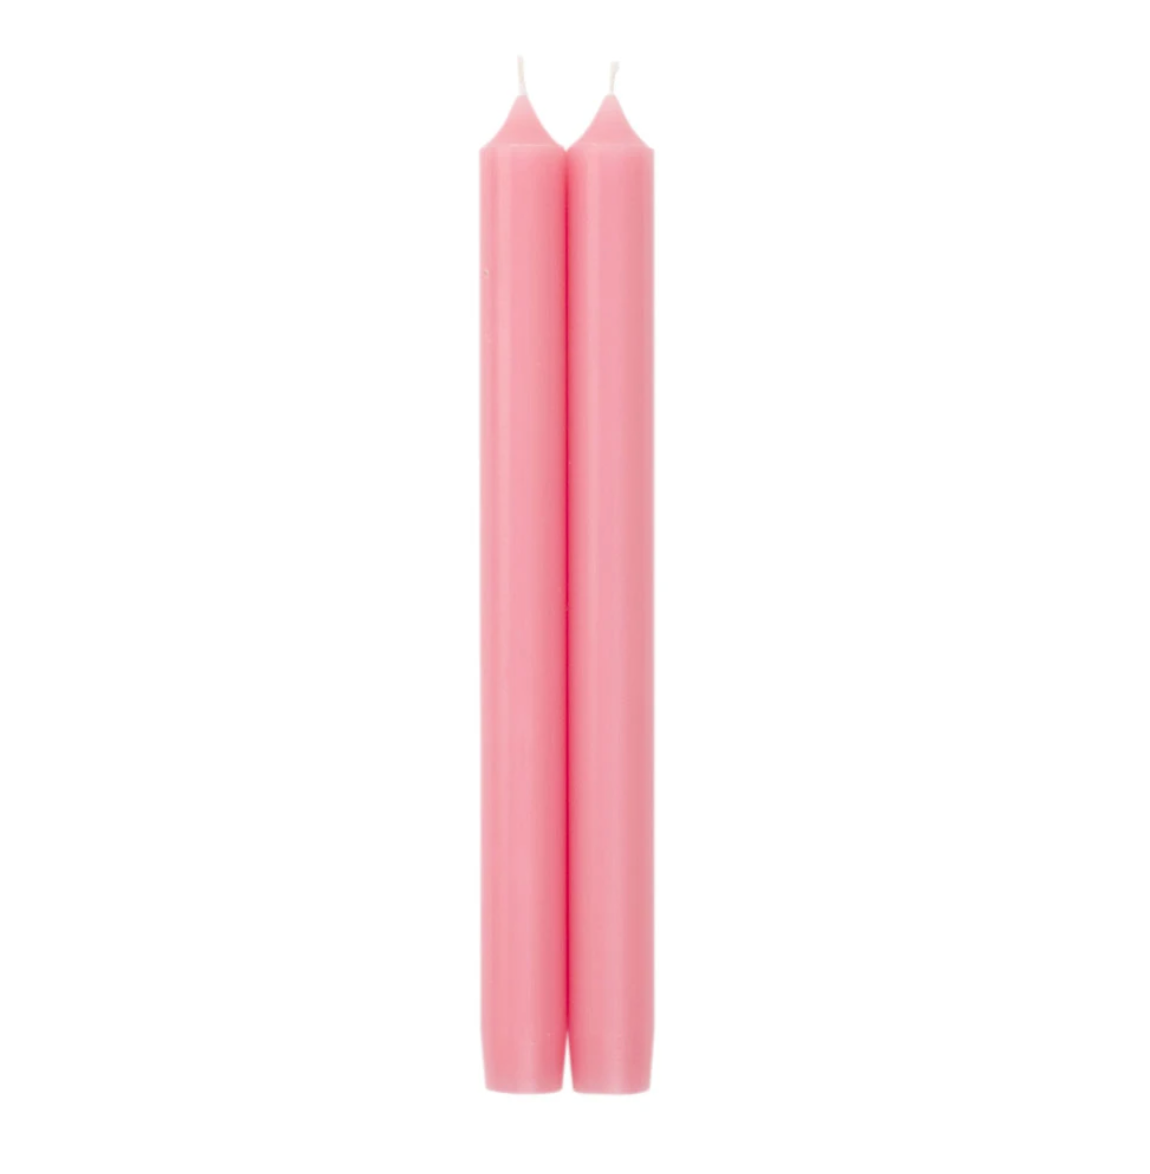 candele tinta unita - rosa inteso